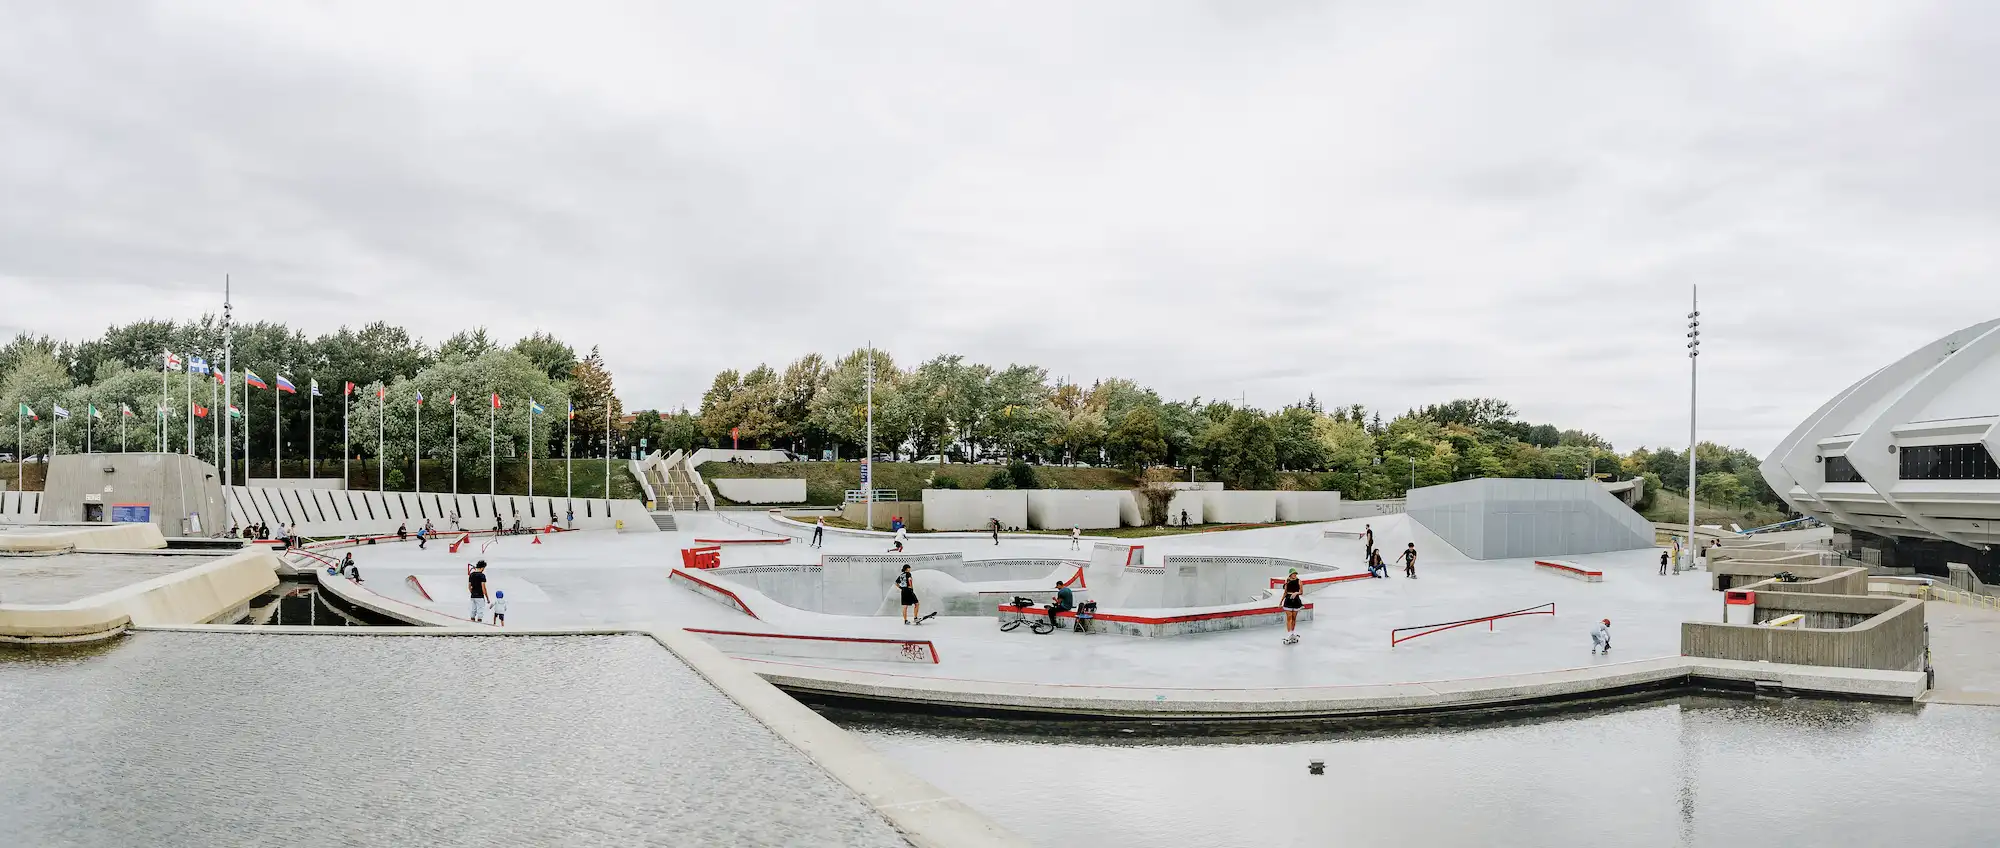 parc olympique skatepark.